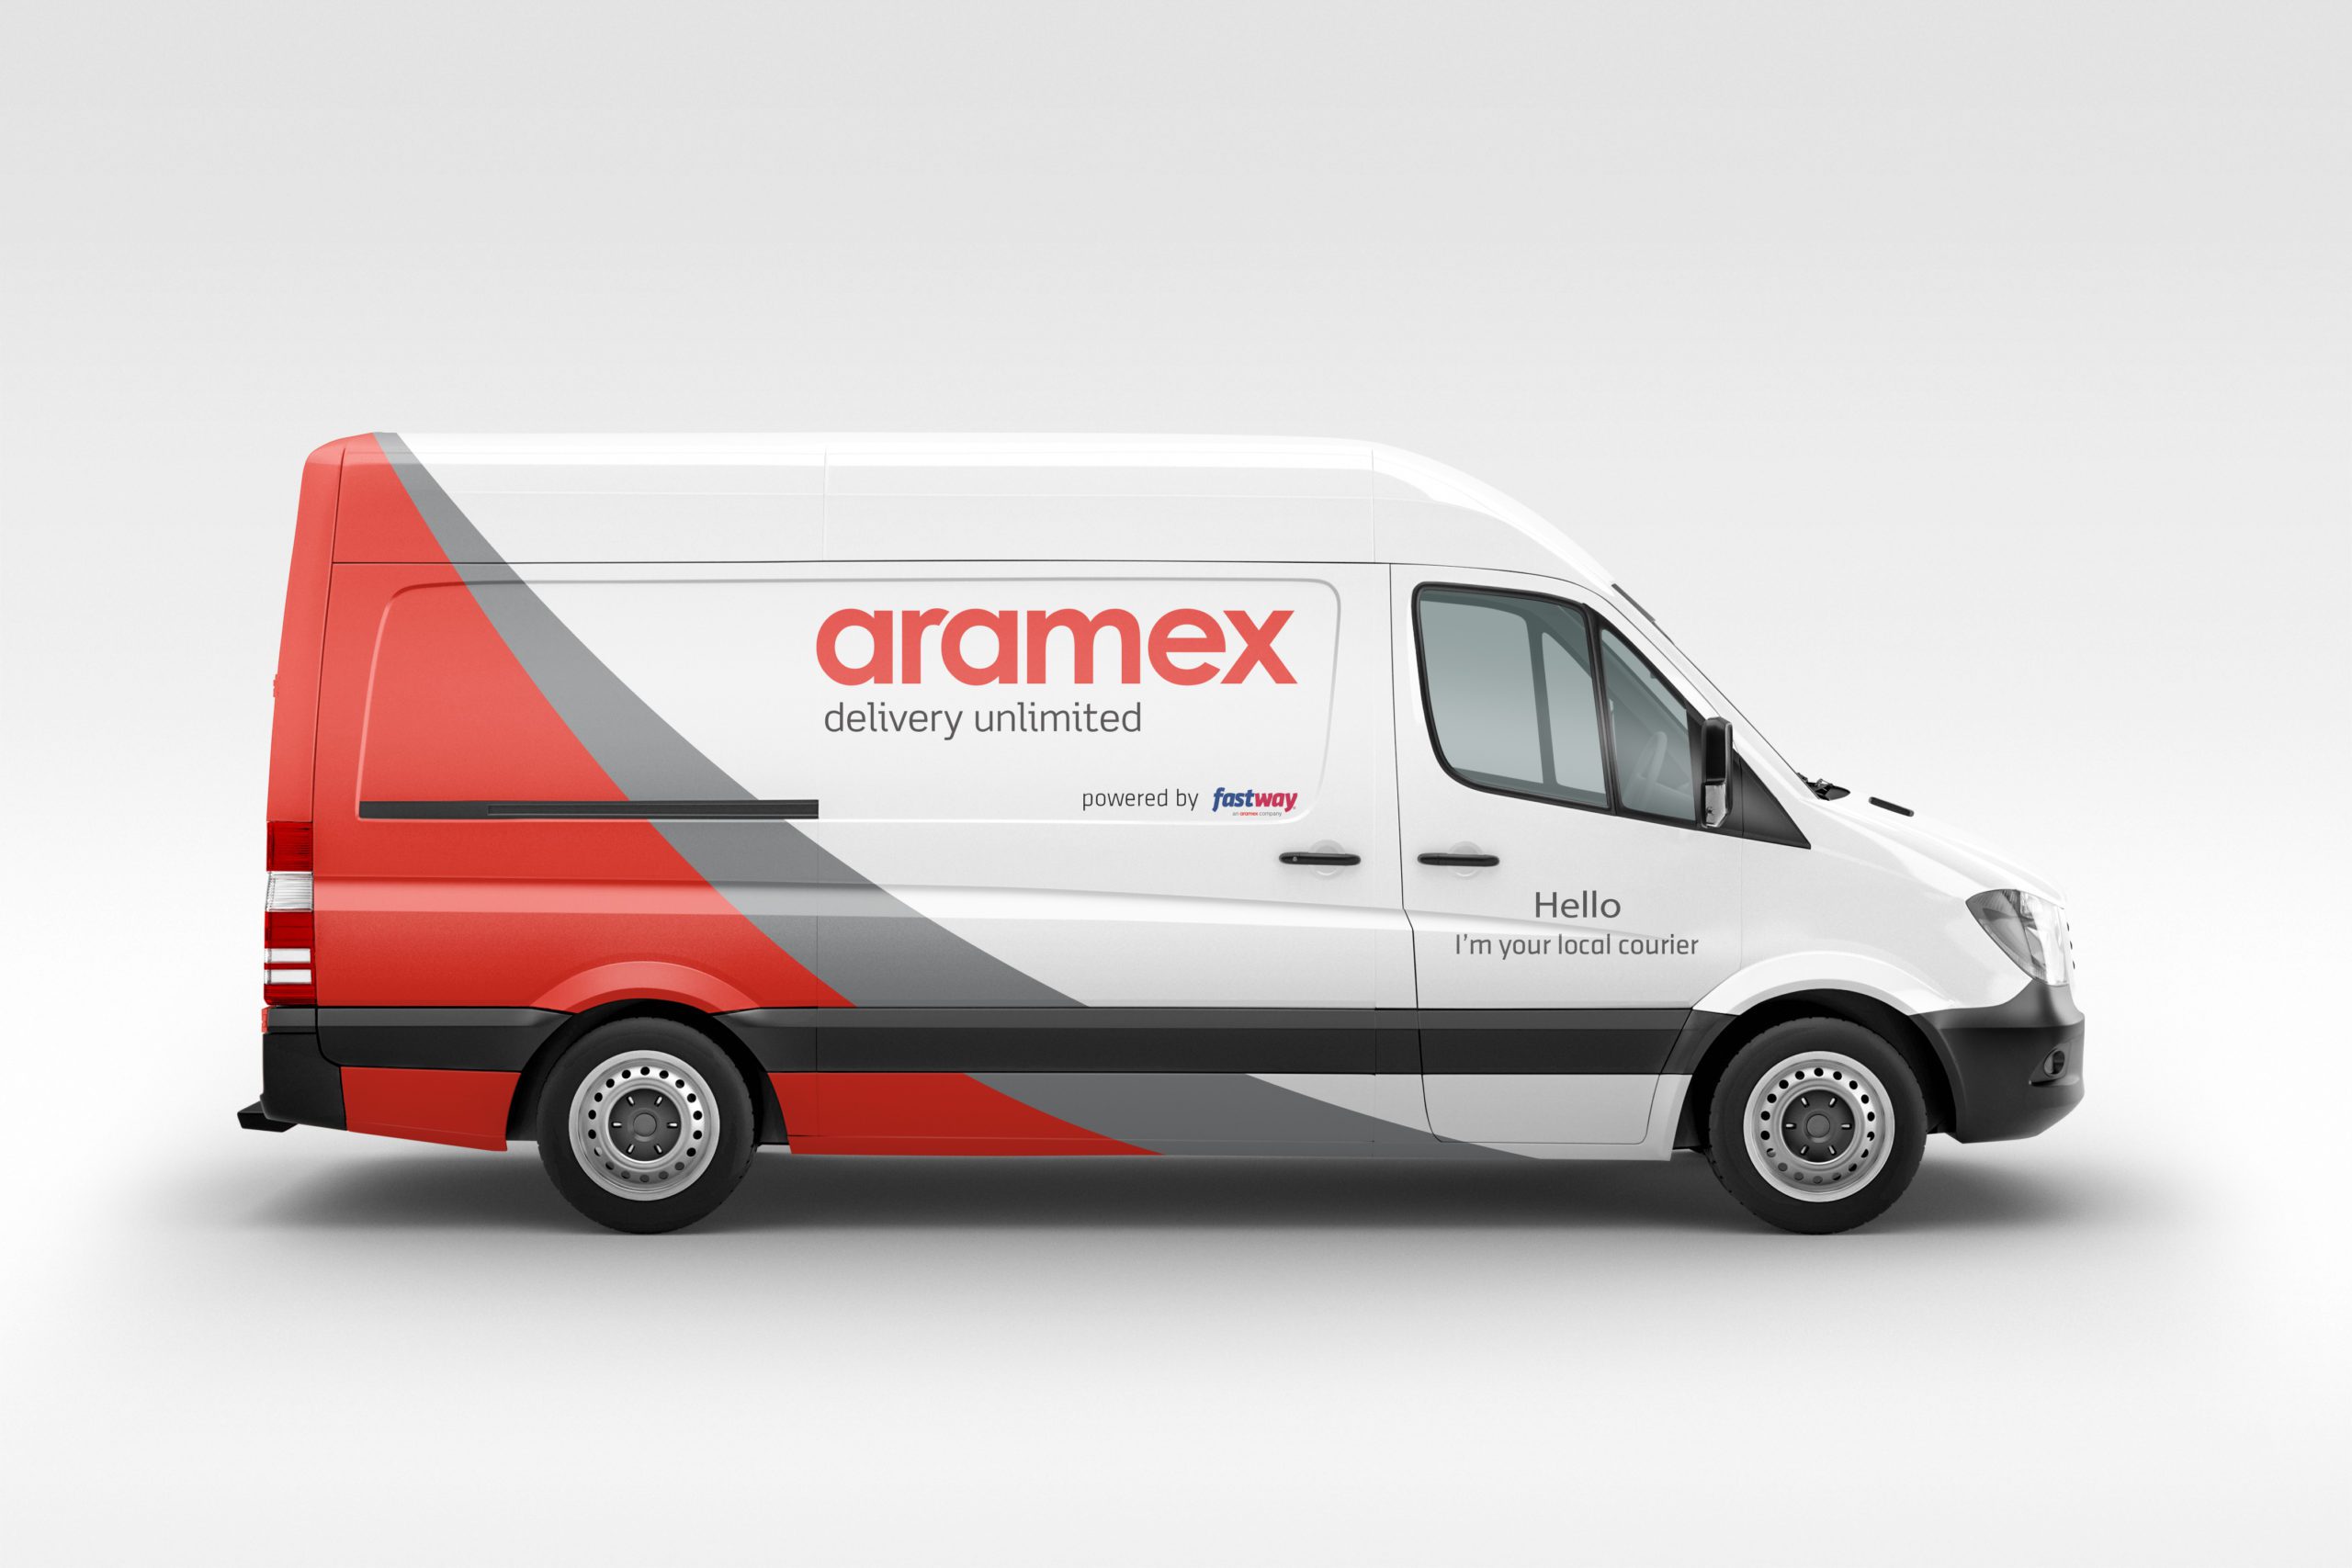 Aramex: Vehicle Signage Concept 2 Side